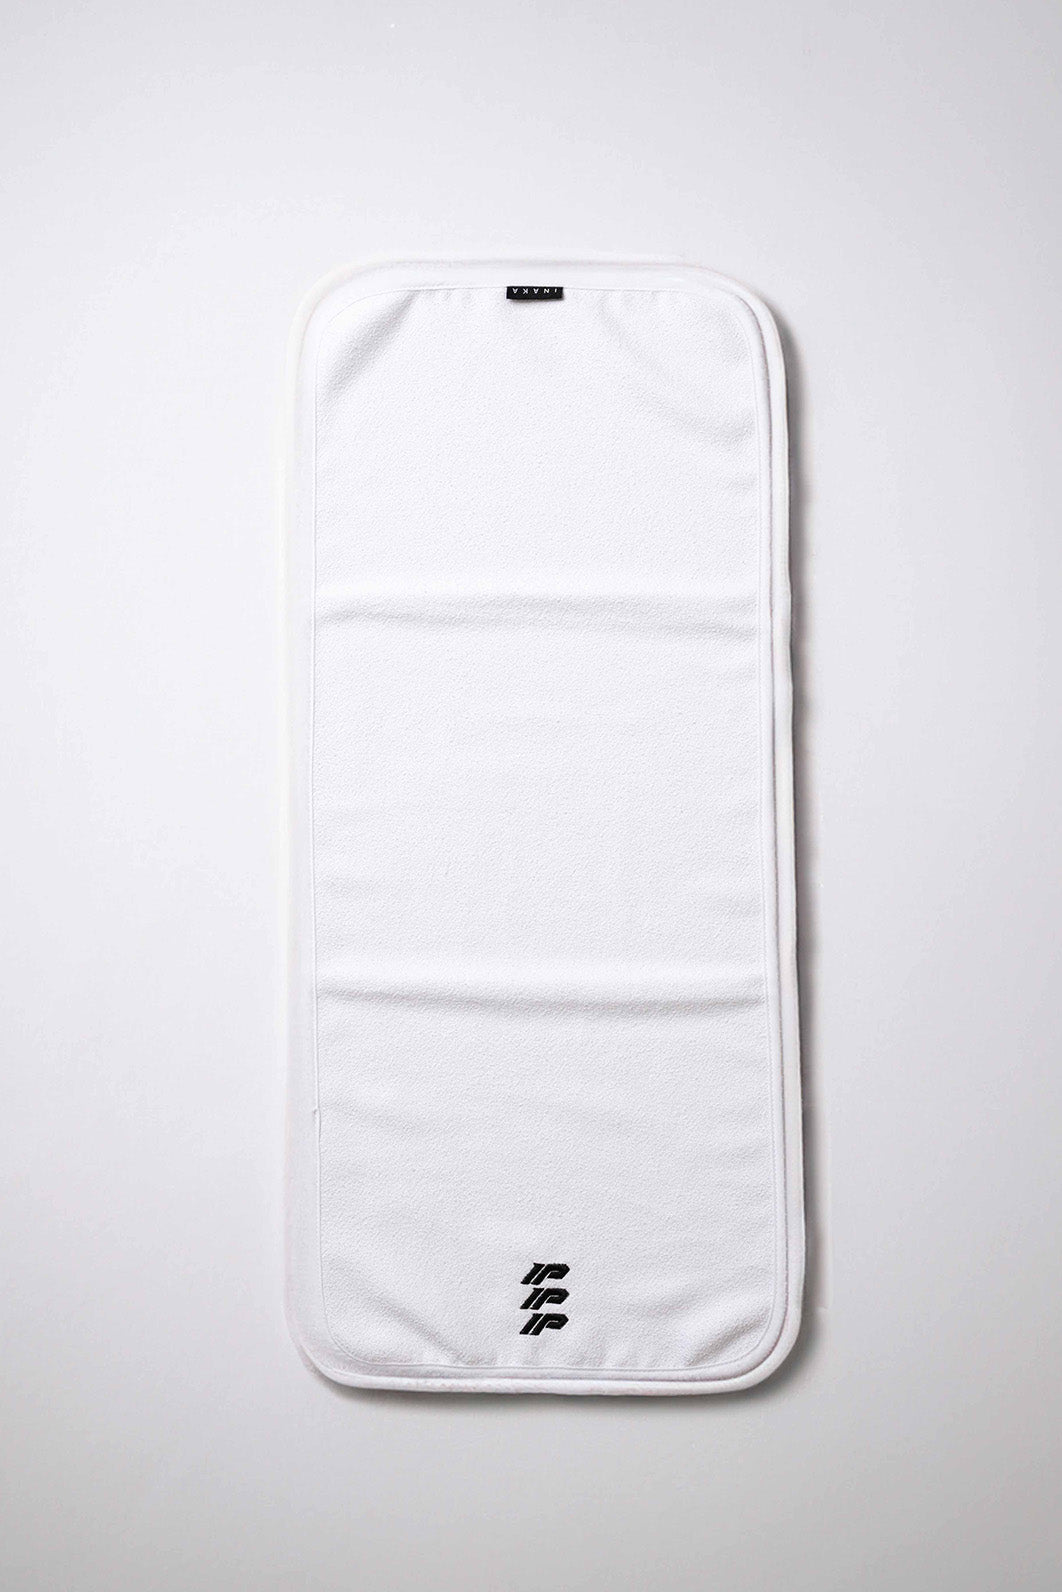 INAKA Performance Towel - White